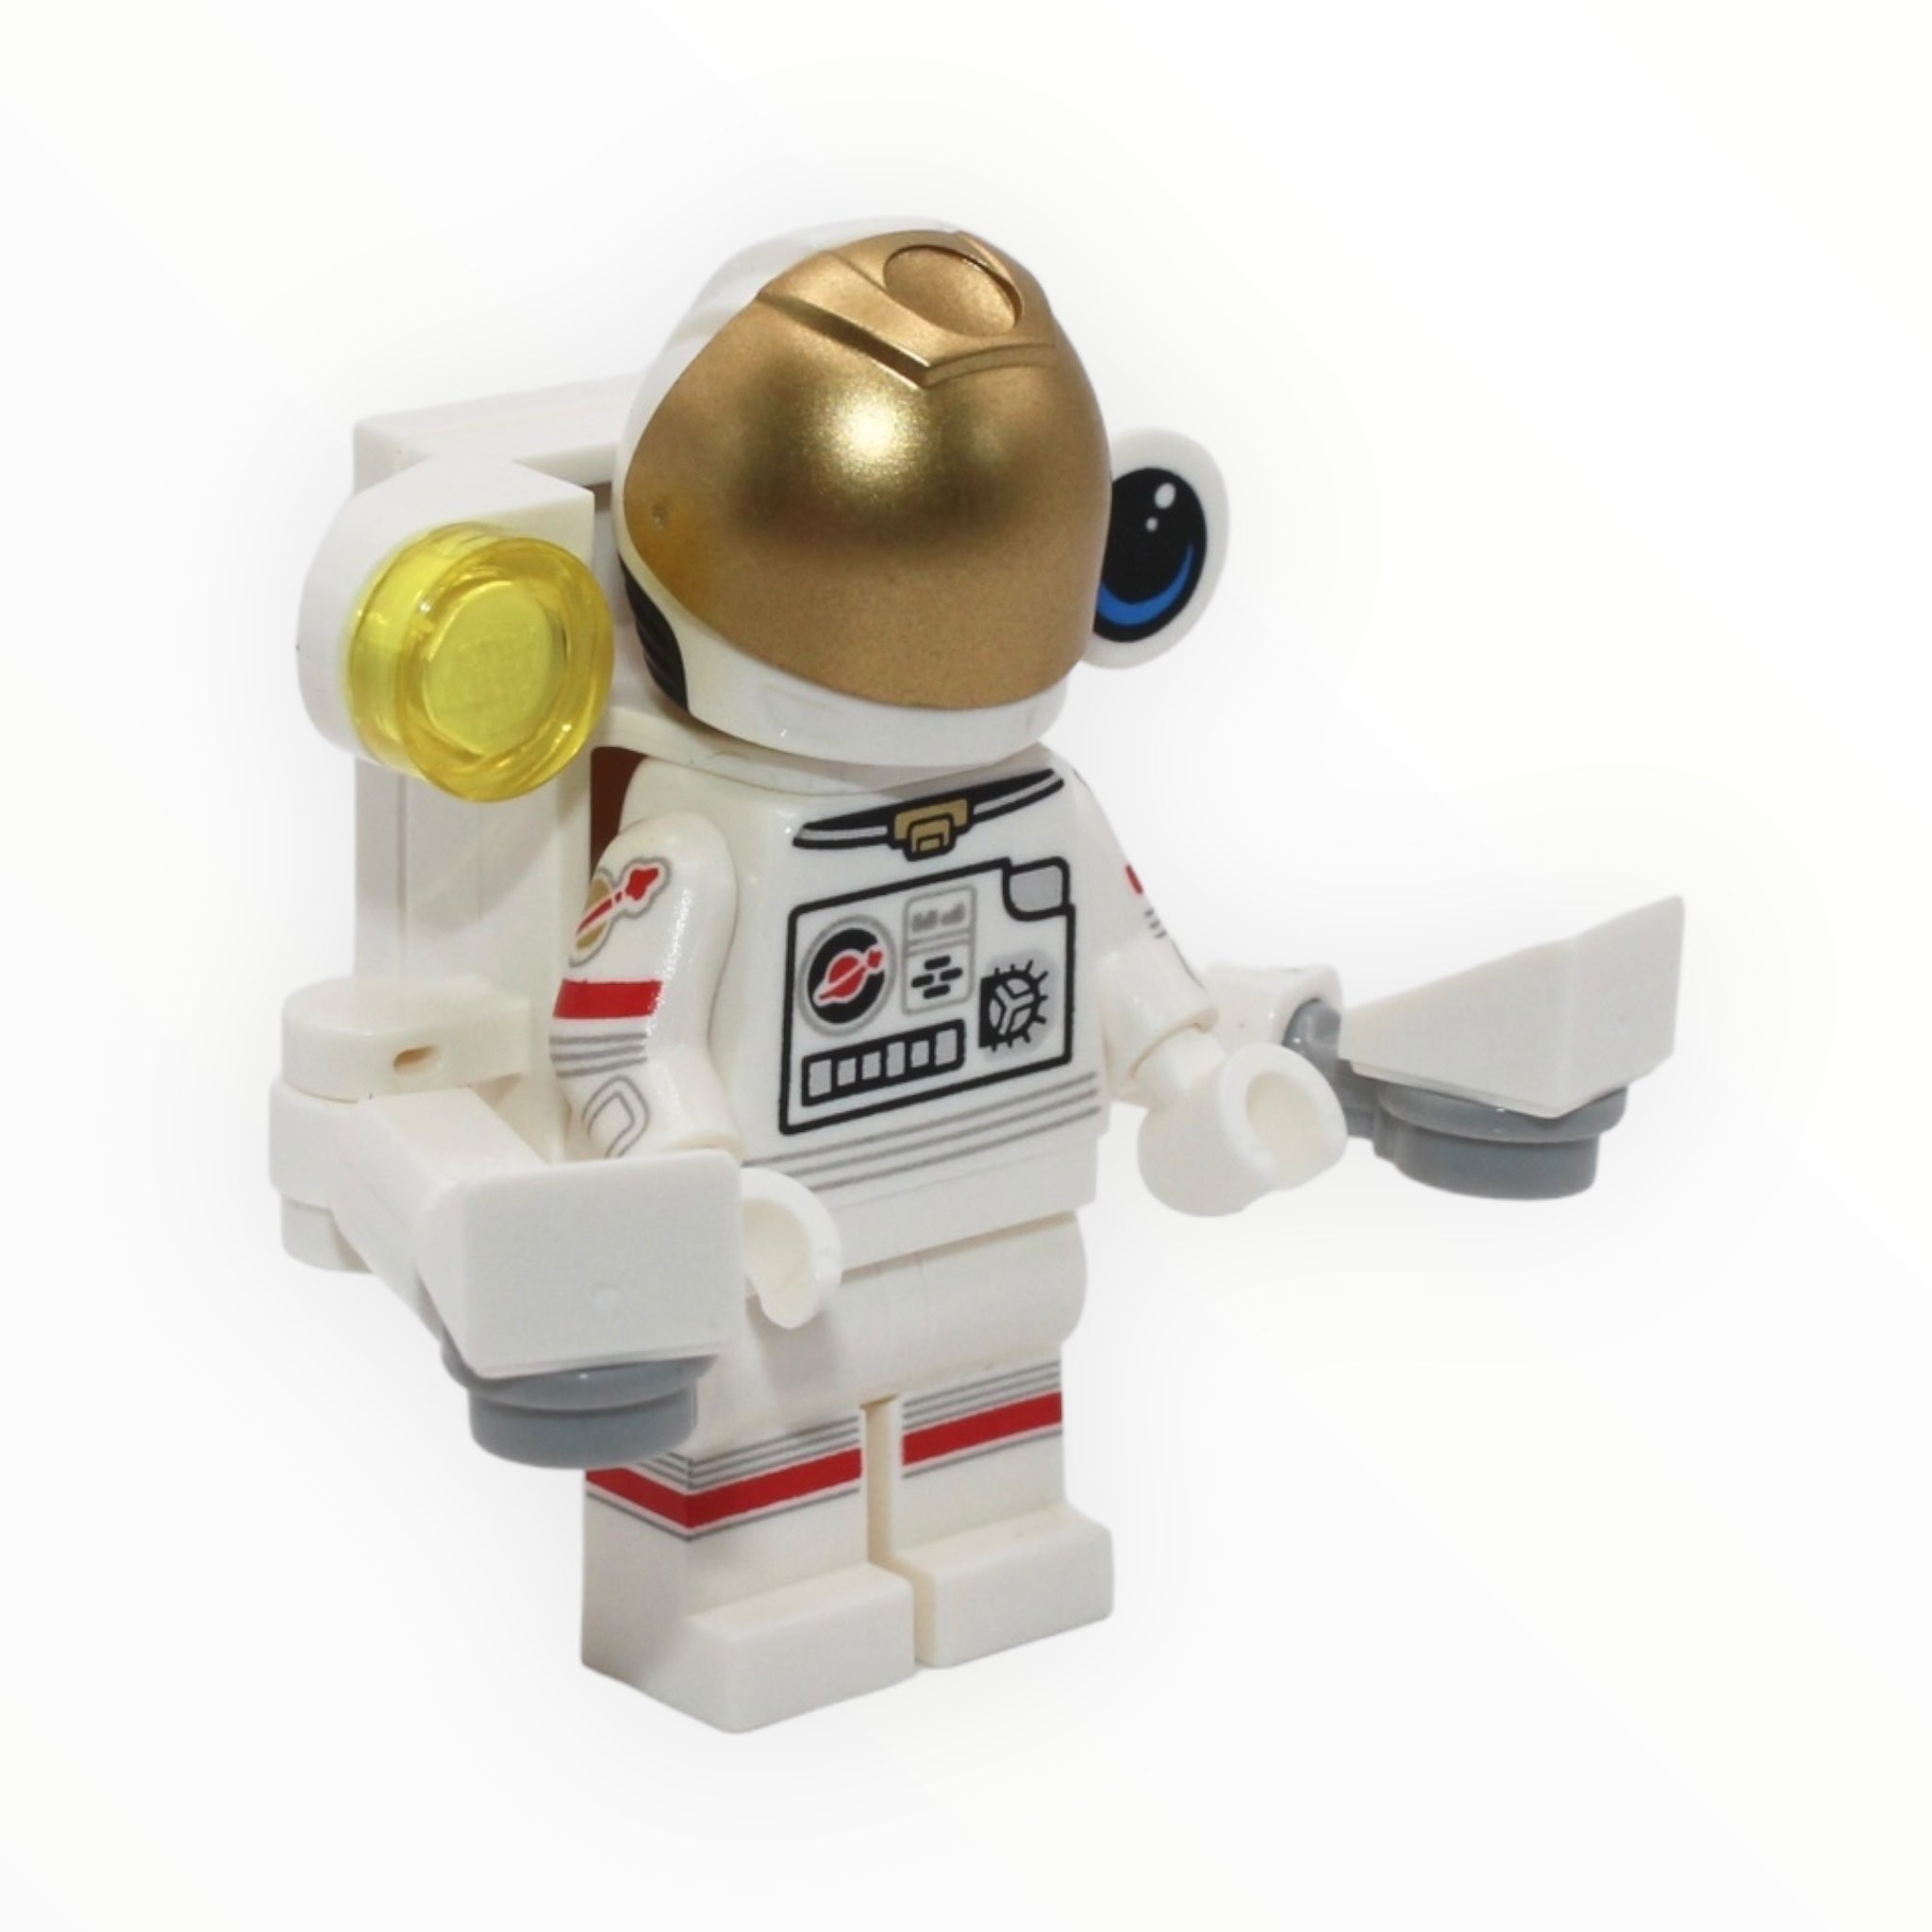 LEGO Series 26: Spacewalking Astronaut